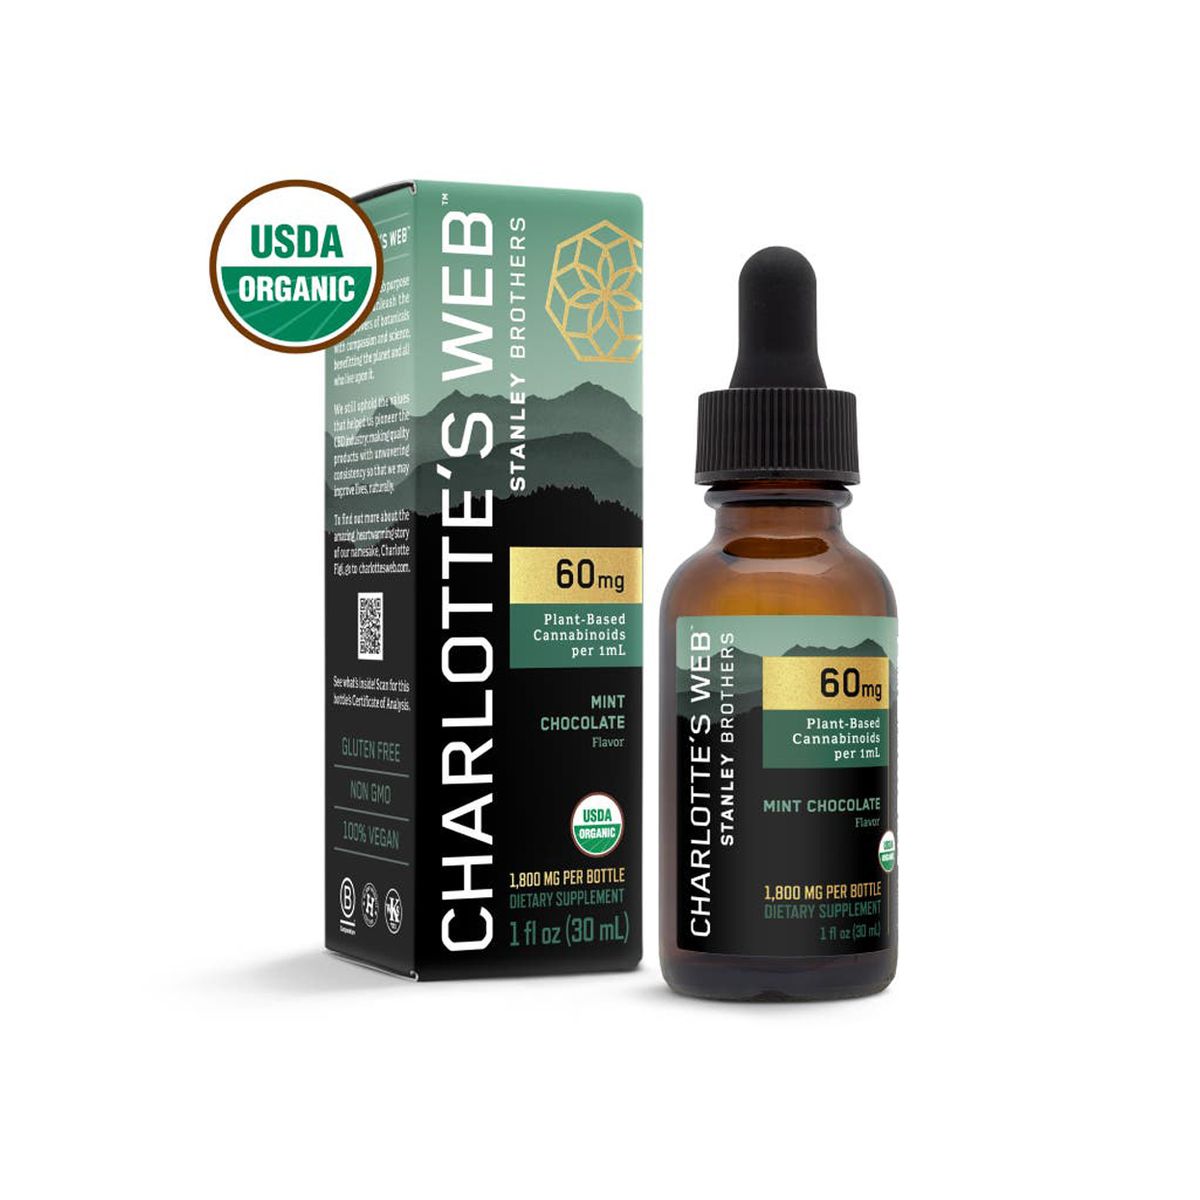 Charotte's Web Max Strength Organic CBD Oil